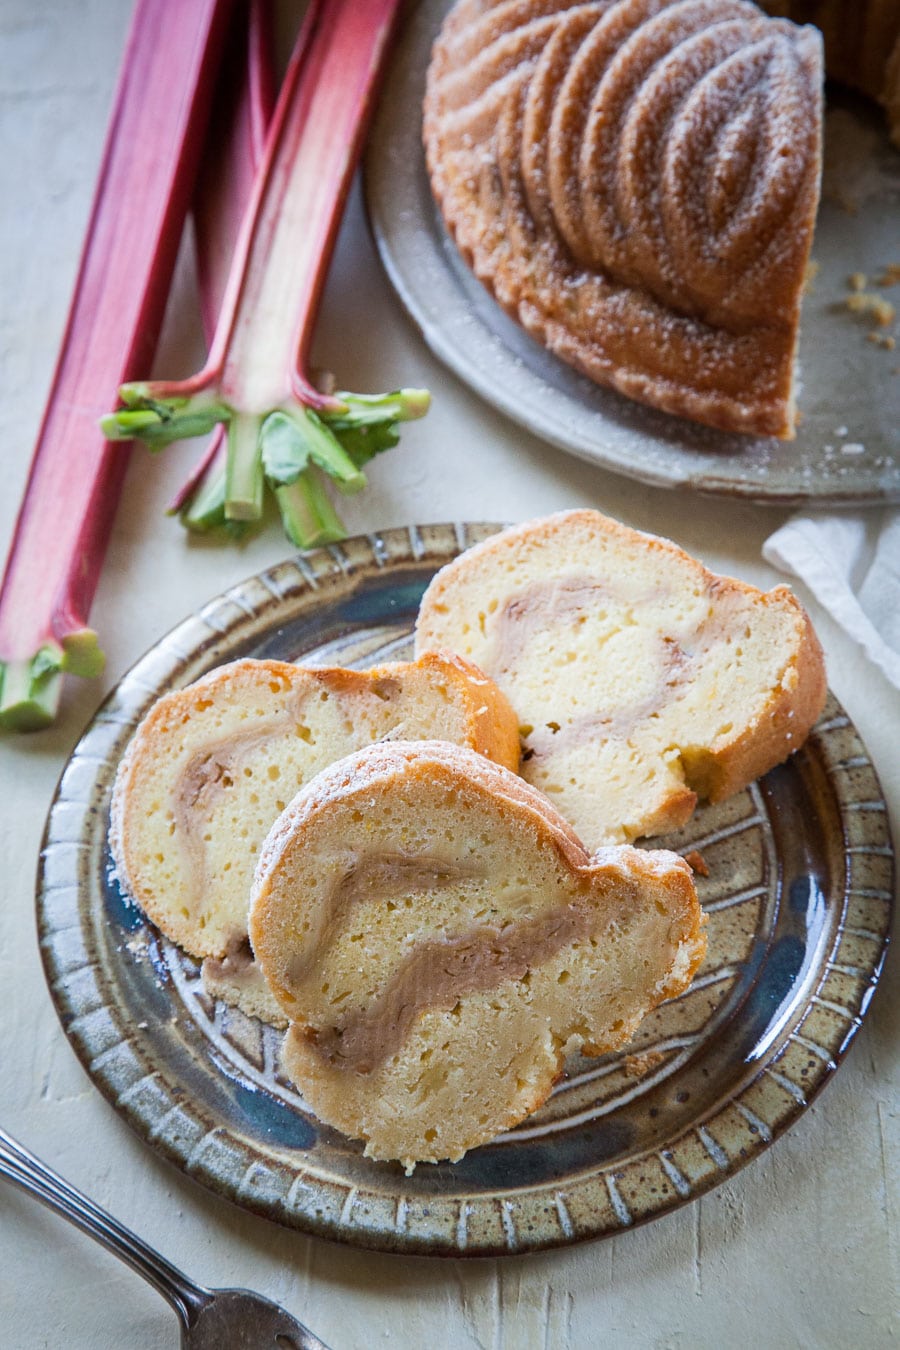 Rhubarb Meyer Lemon Bundt Cake. Photo and recipe by Irvin Lin of Eat the Love.